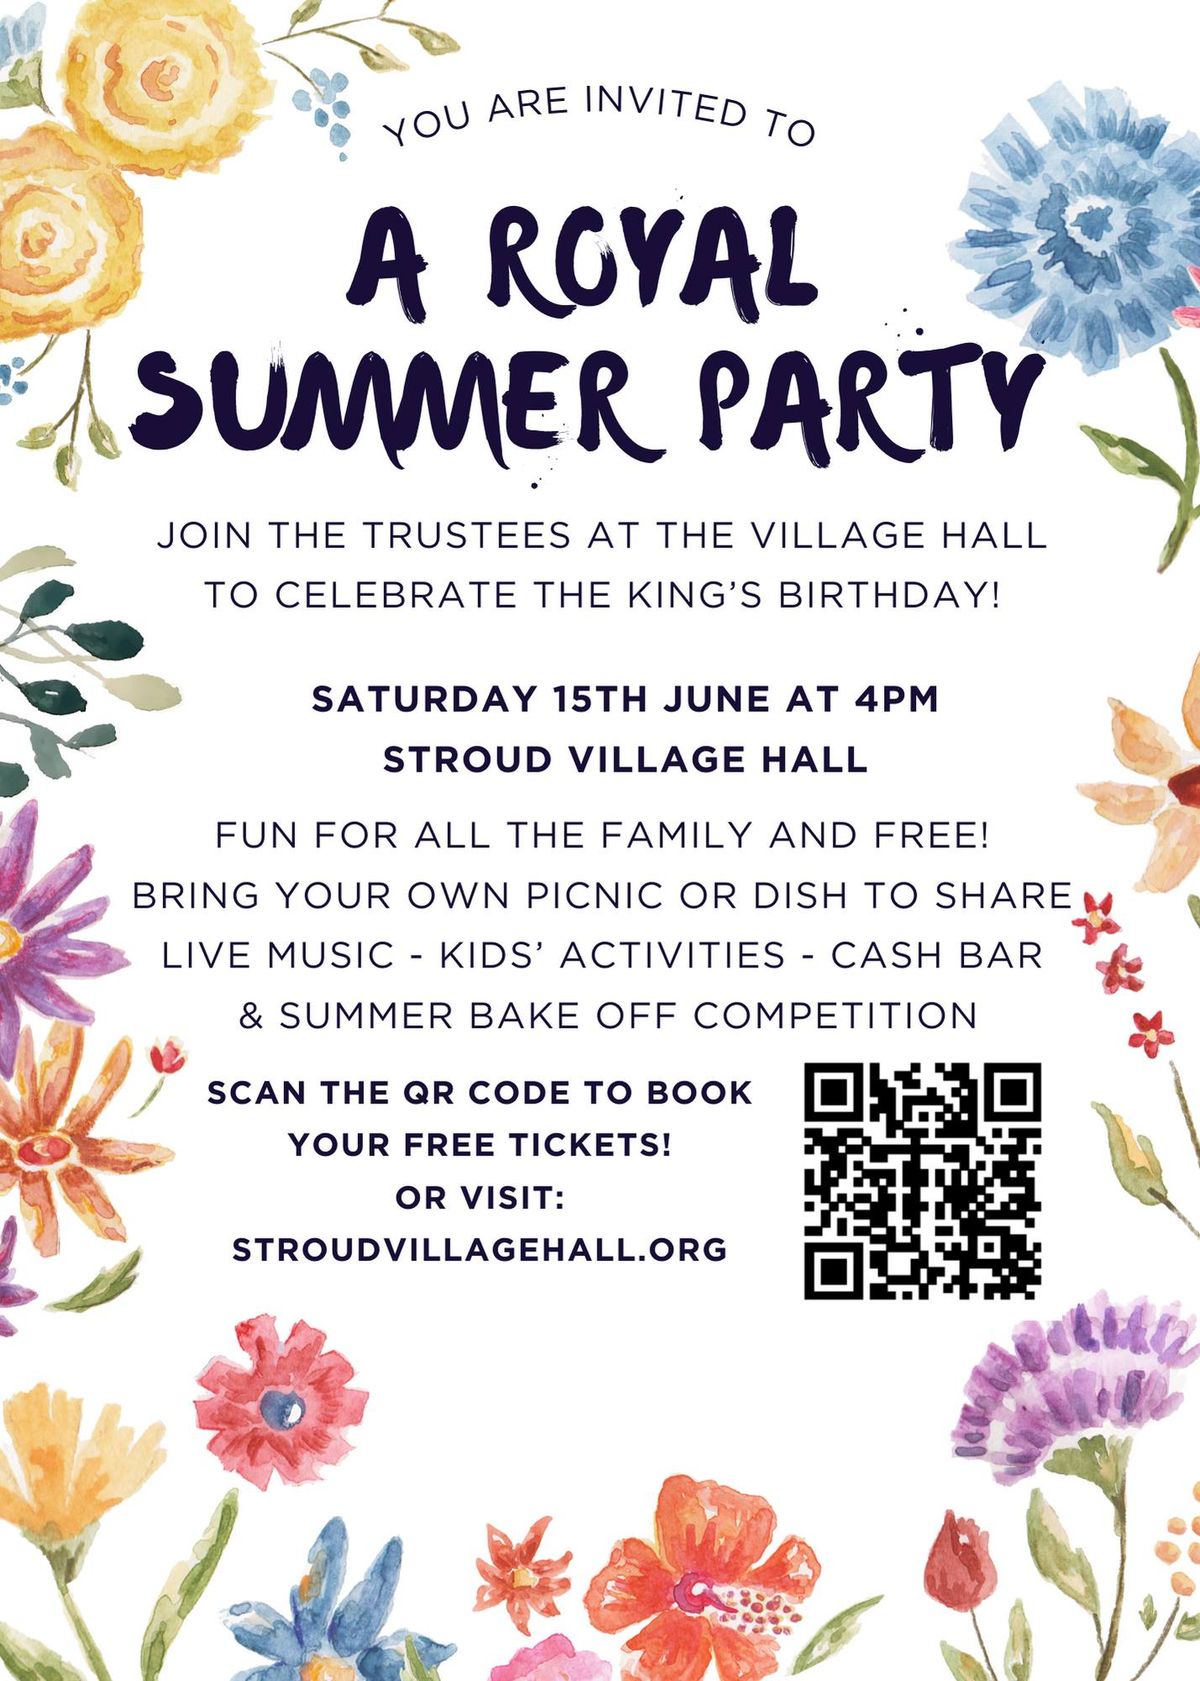 A Royal Summer Party